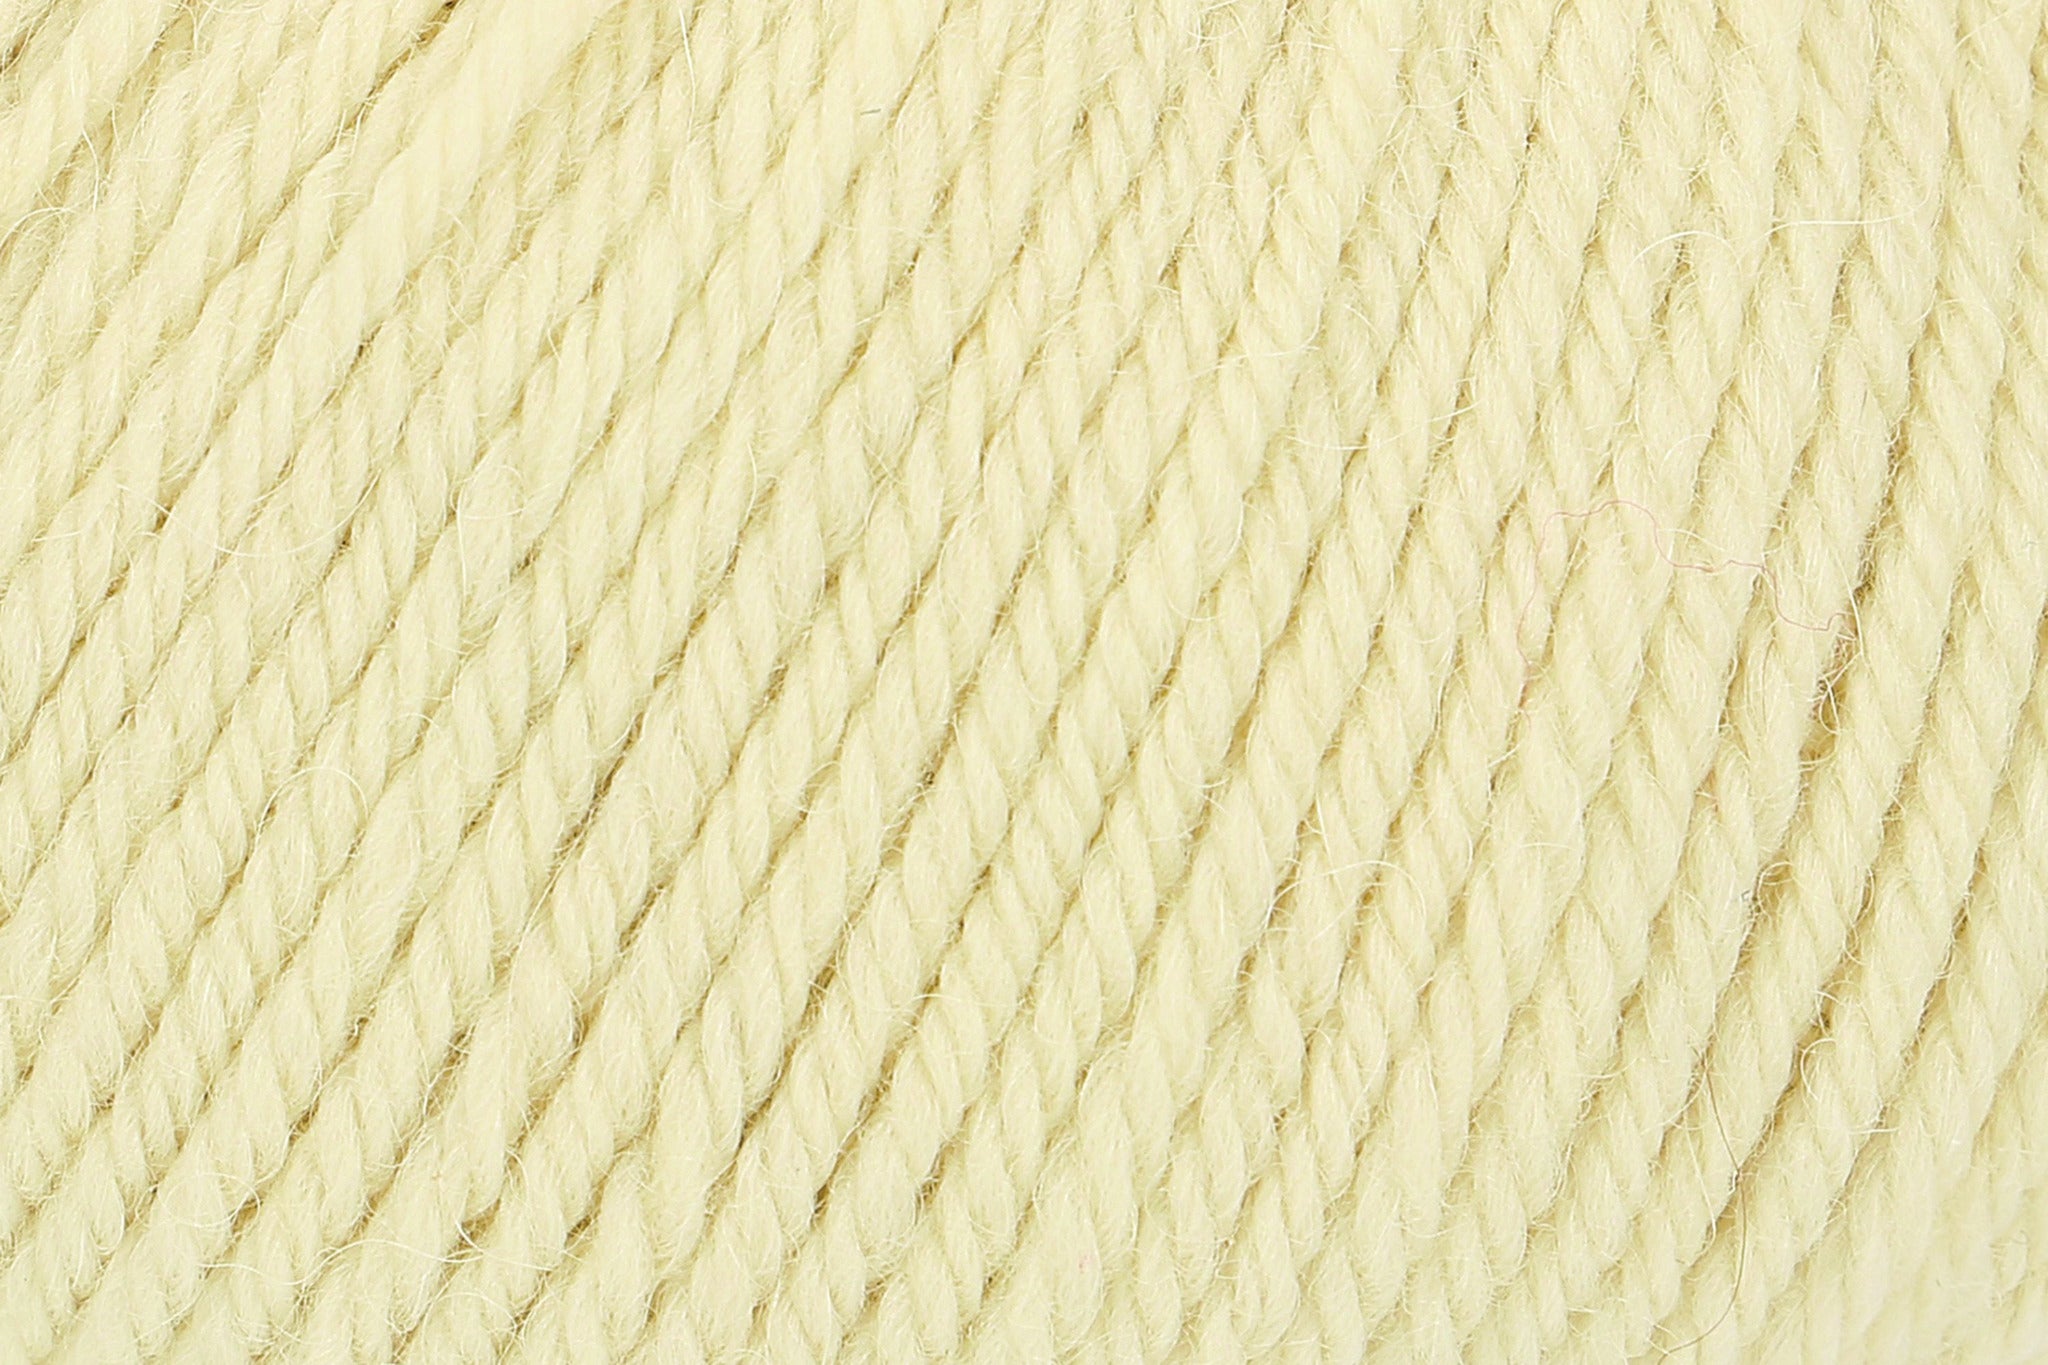 Rowan Alpaca Soft DK in Off White-221